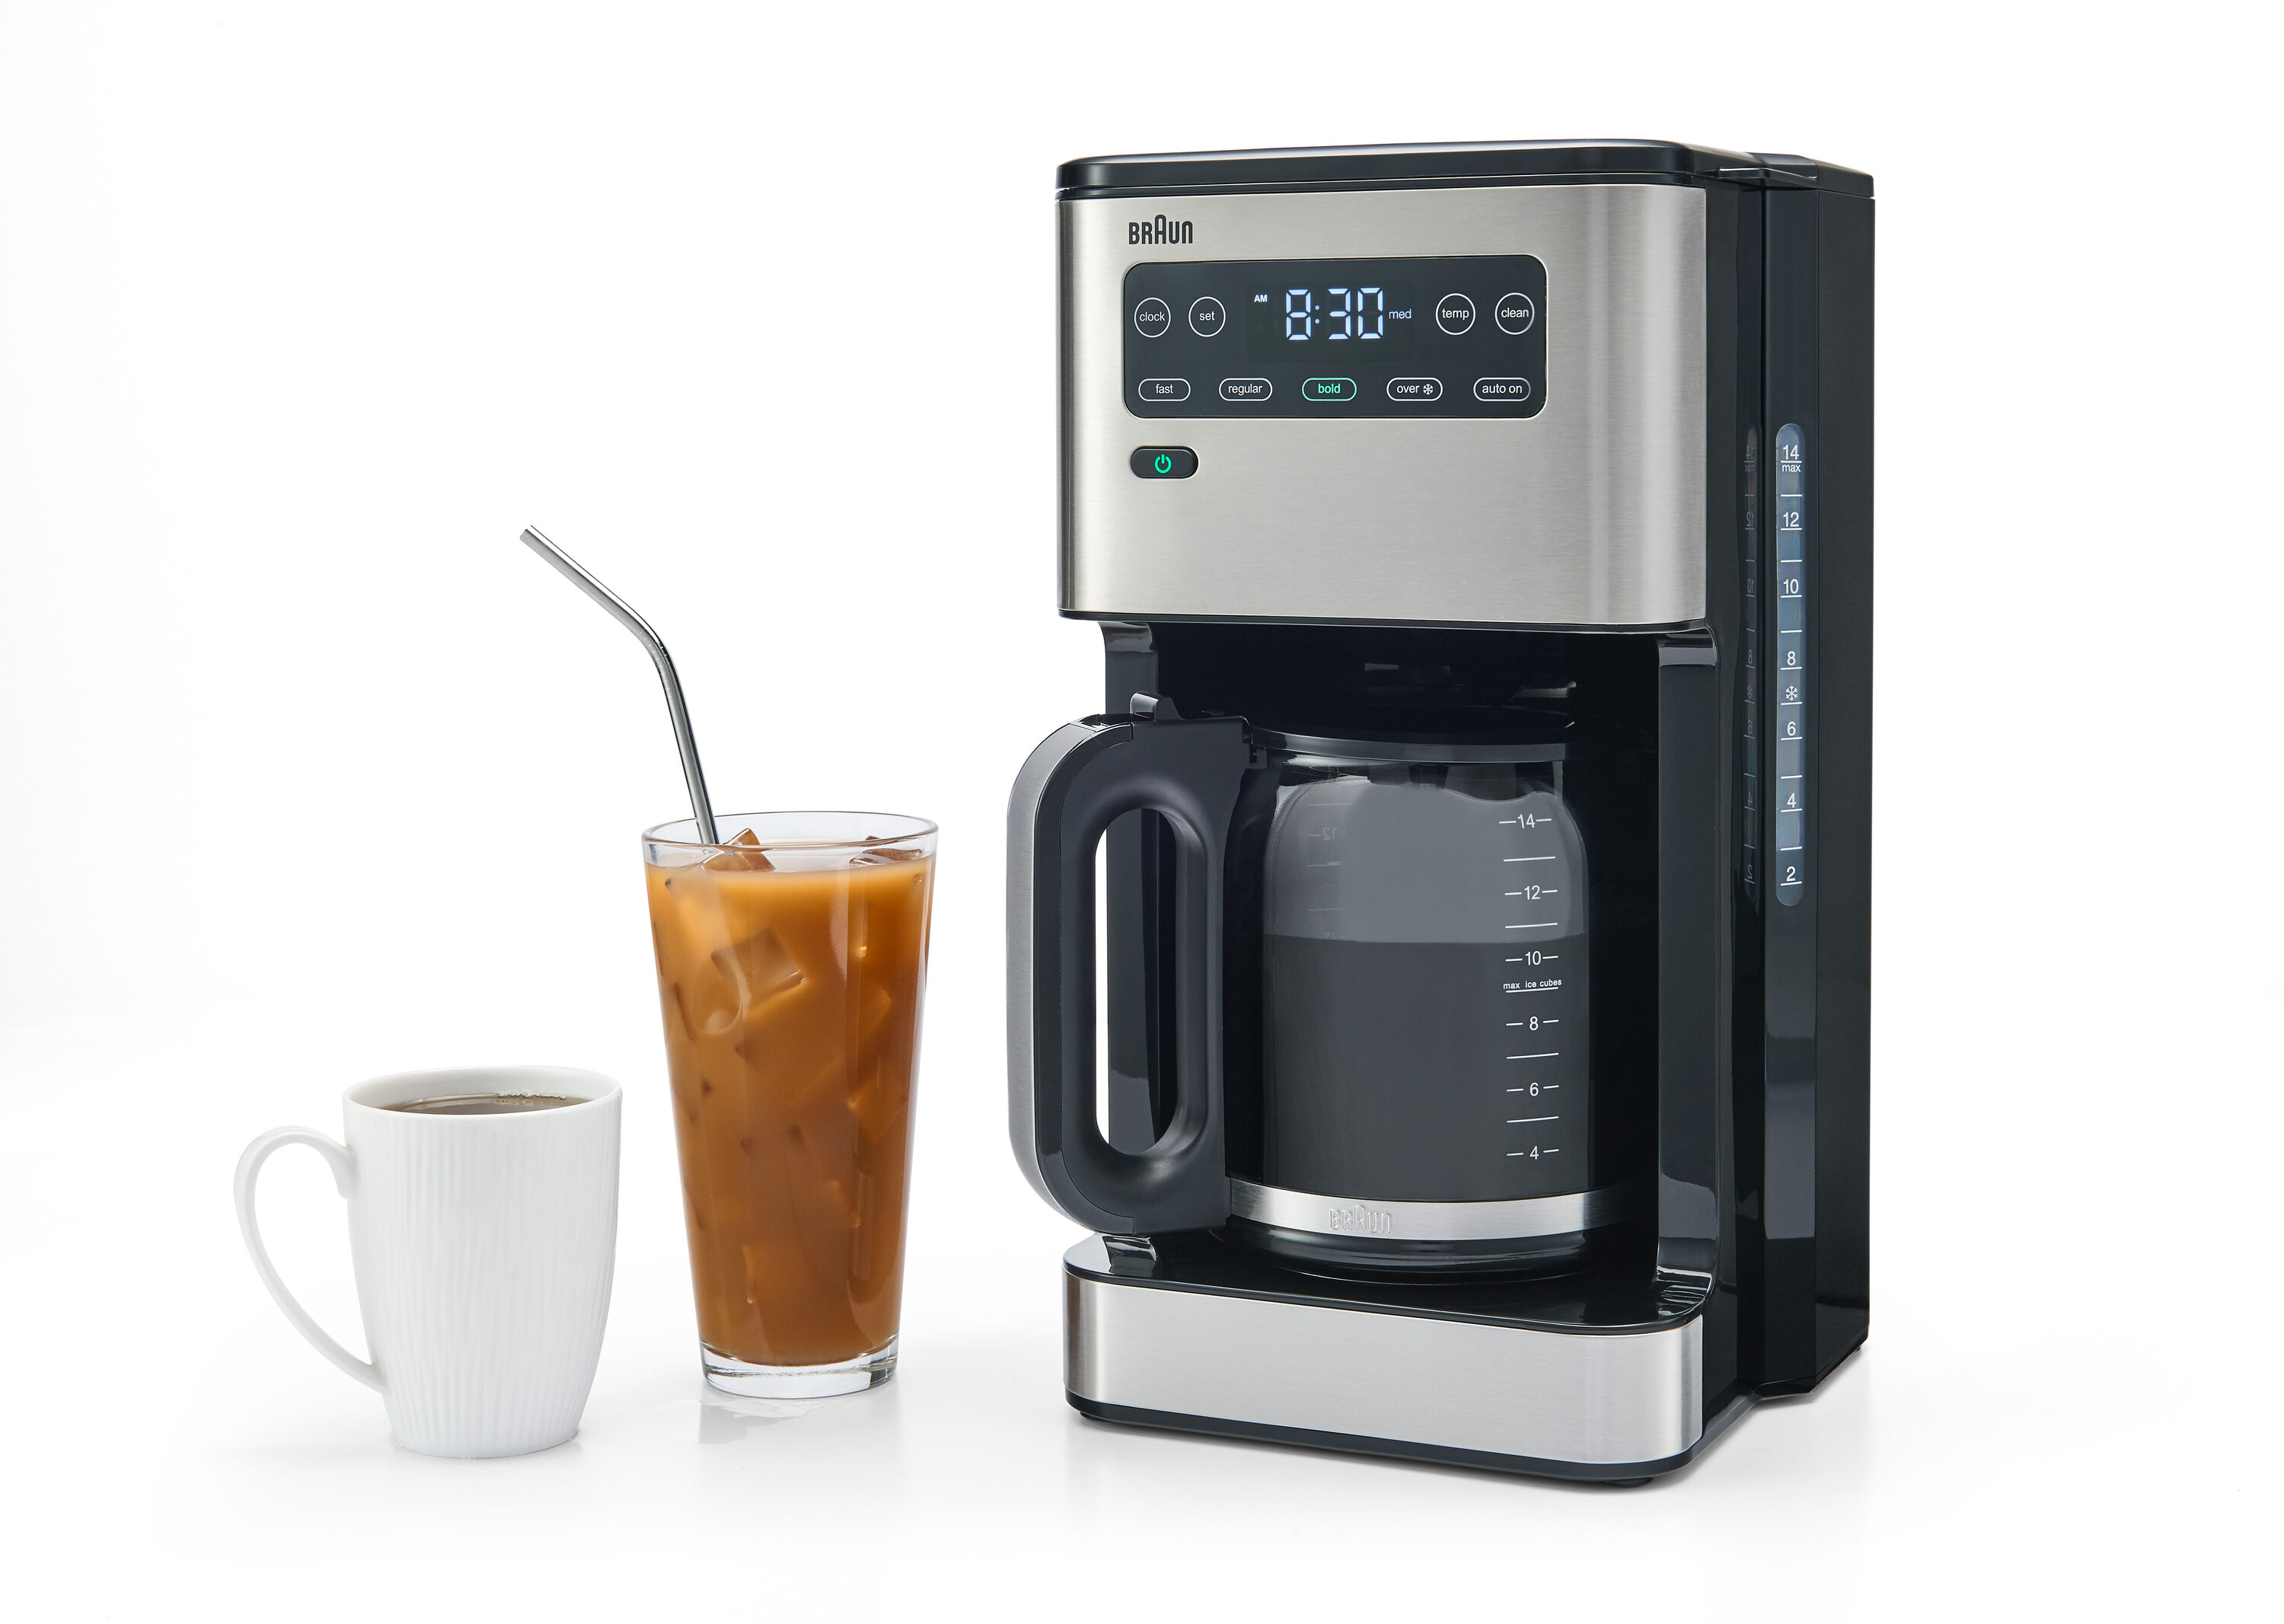 Braun Glass 12 Cup FlavorCarafe for BrewSense Drip Coffee Maker